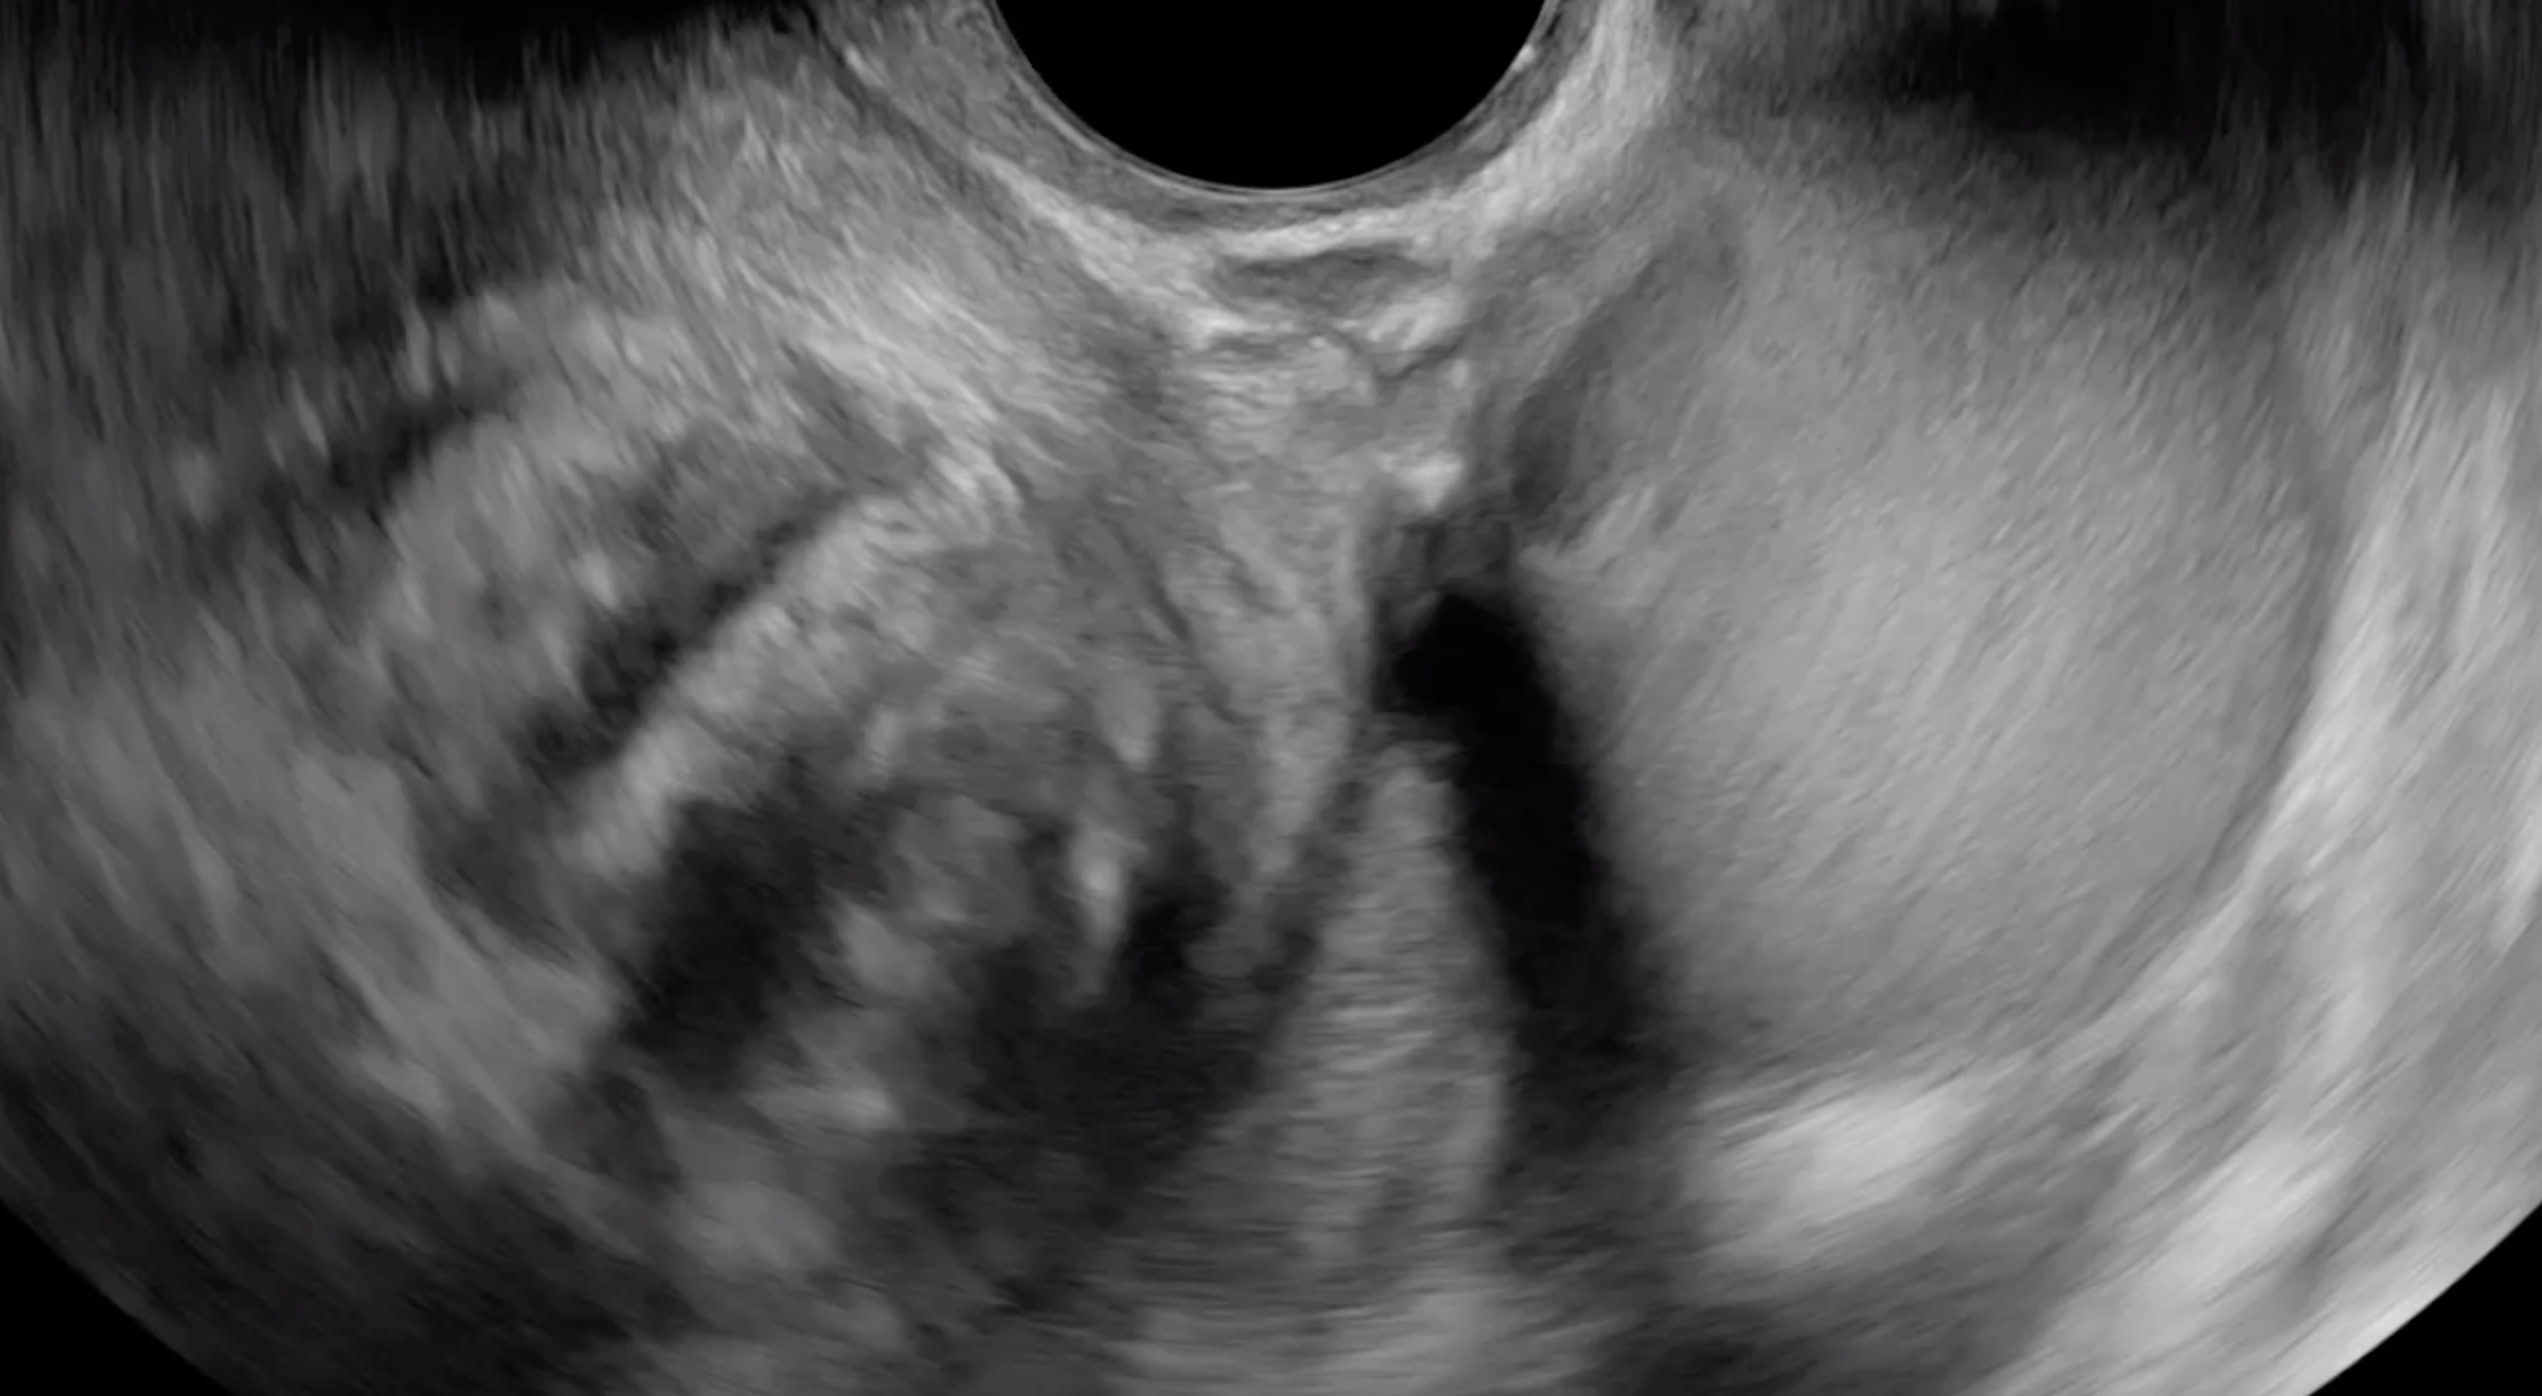 Ovarian endometrioma within inferomedially immobile ovary.